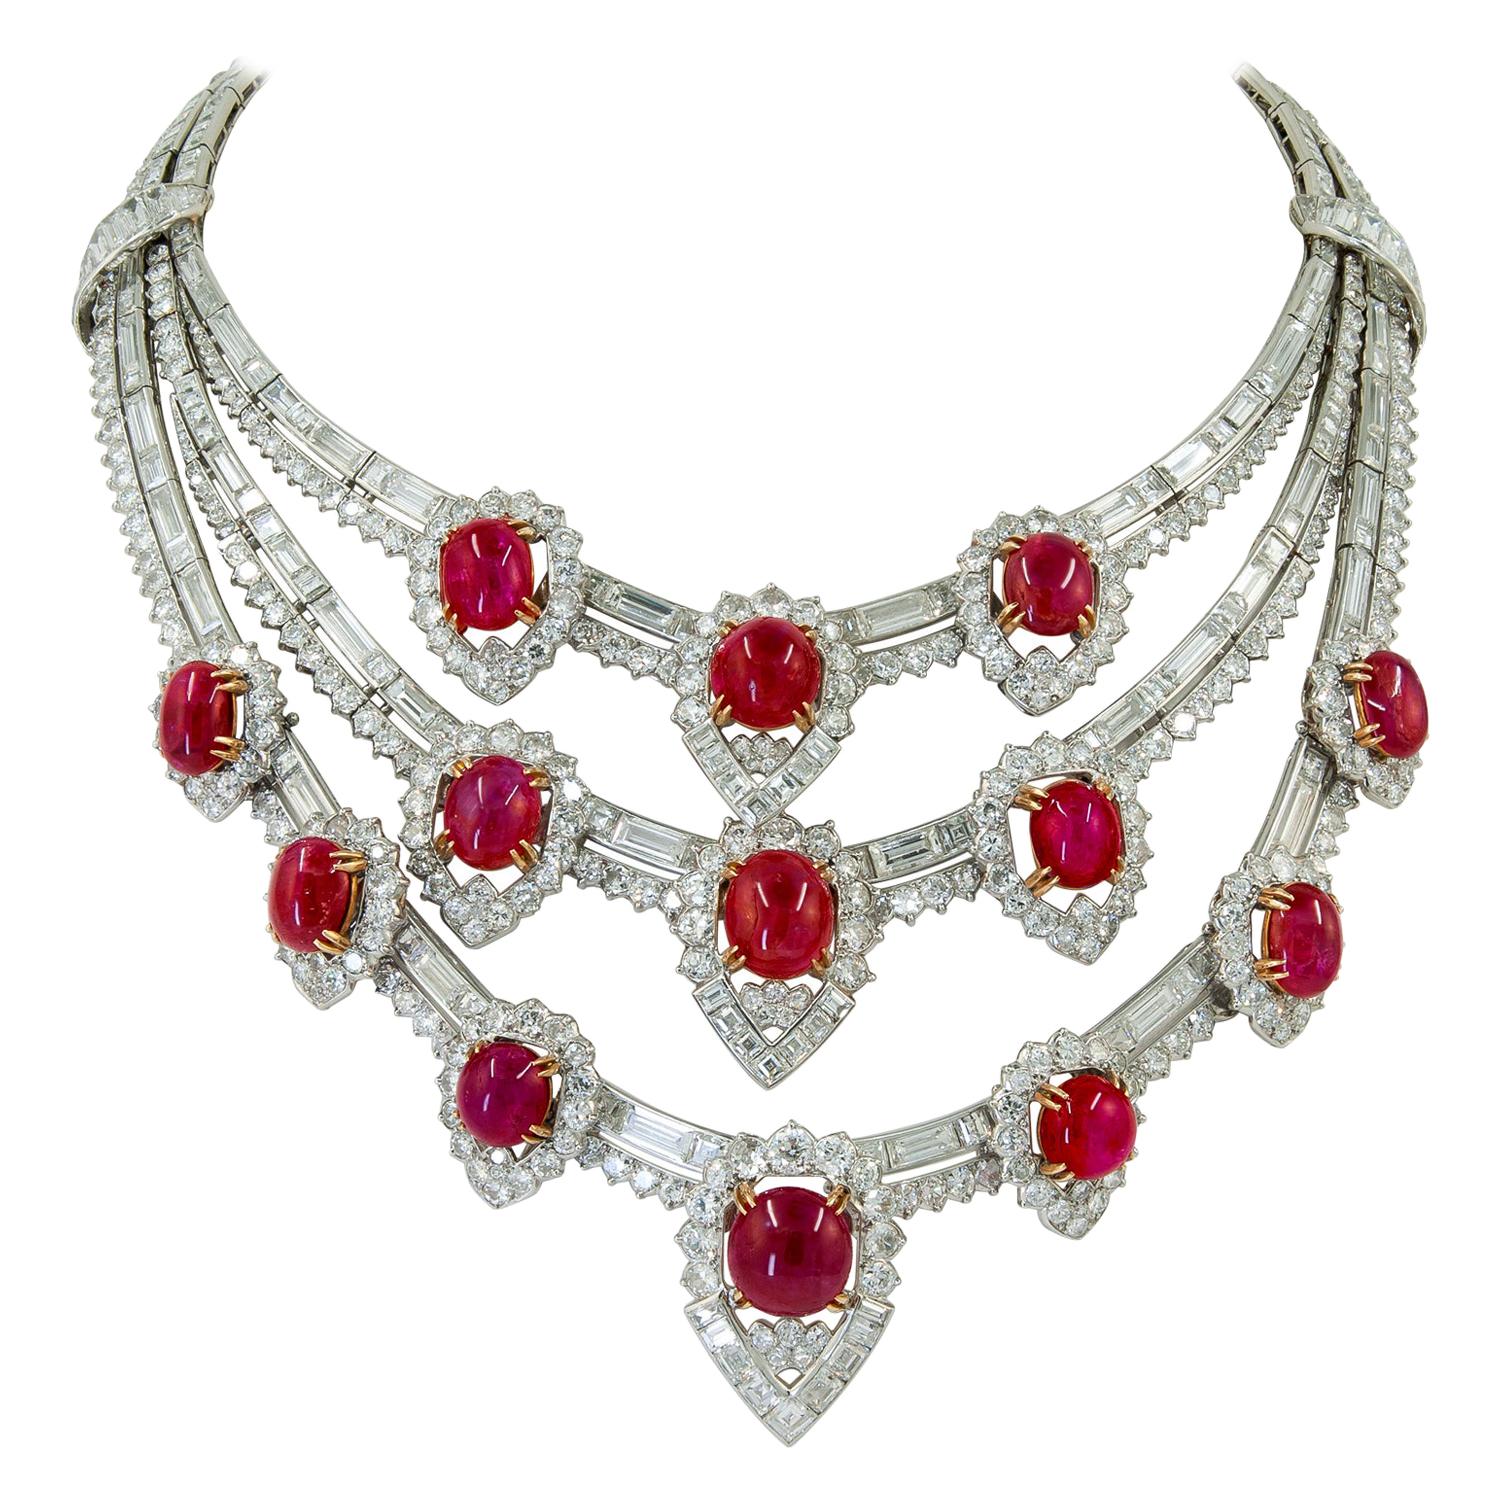 The Estee Lauder Van Cleef & Arpels Important Retro Ruby Diamond Necklace